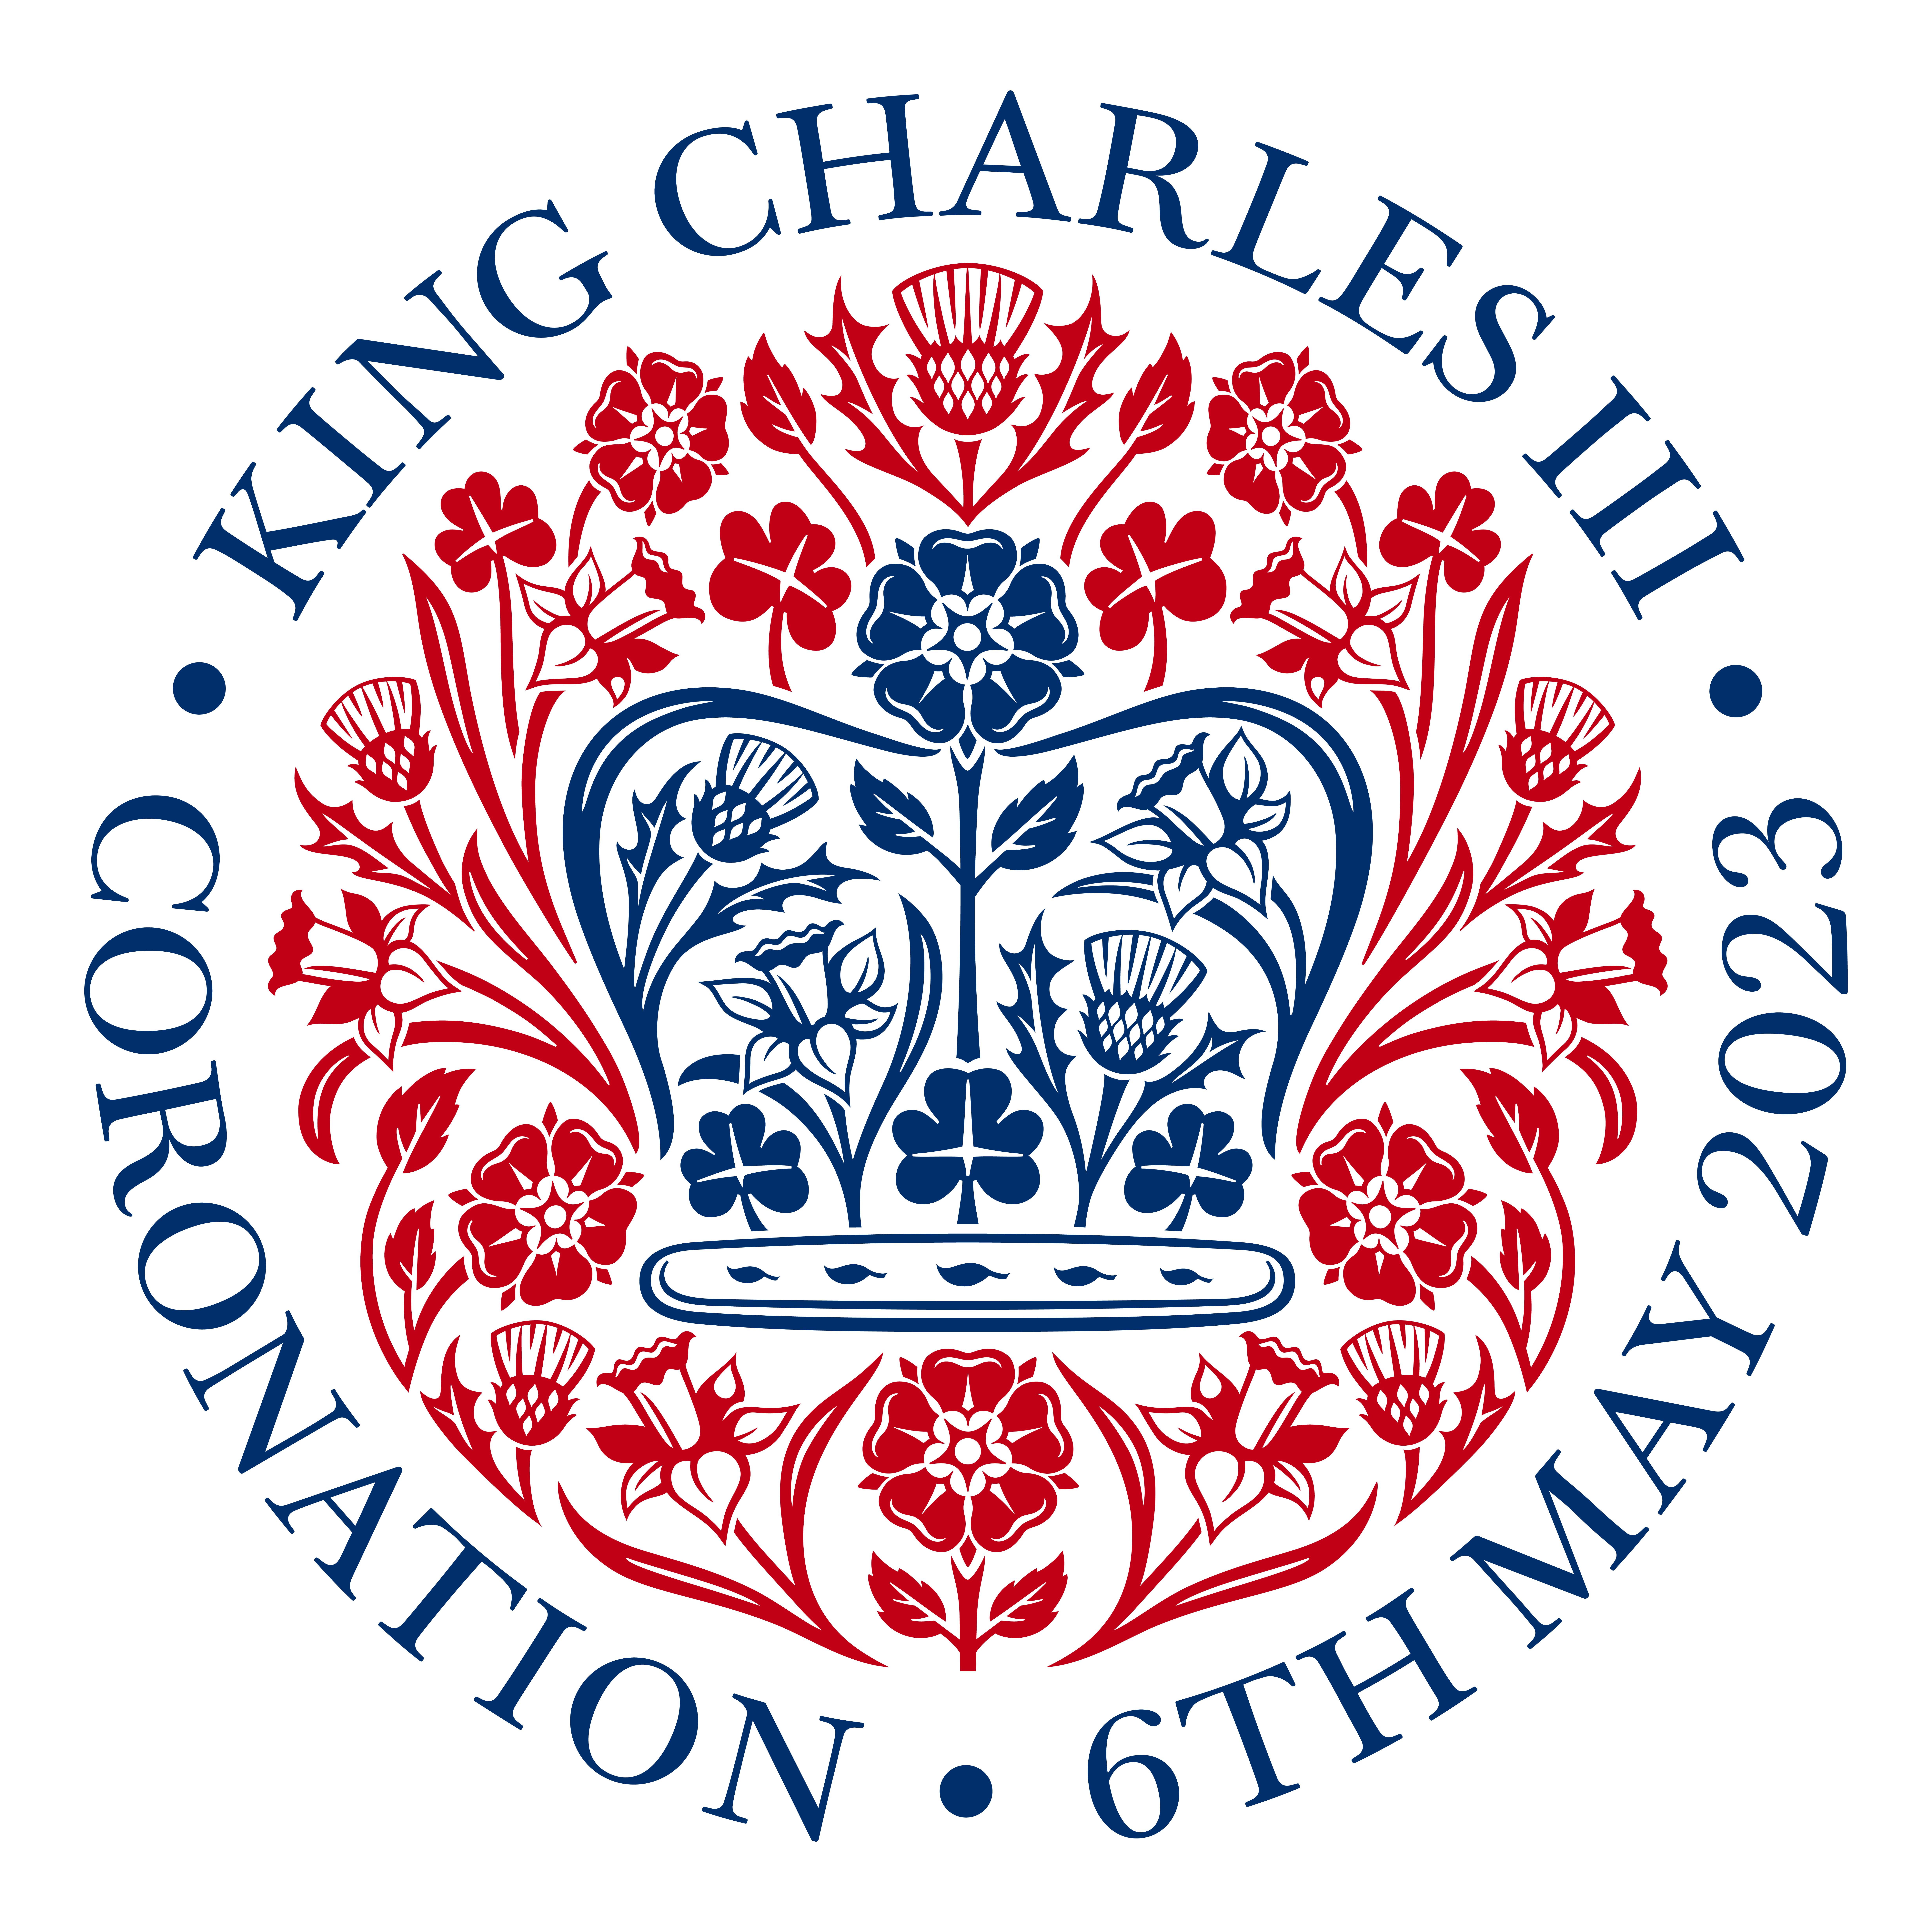 His Majesty Charles III Coronation emblem